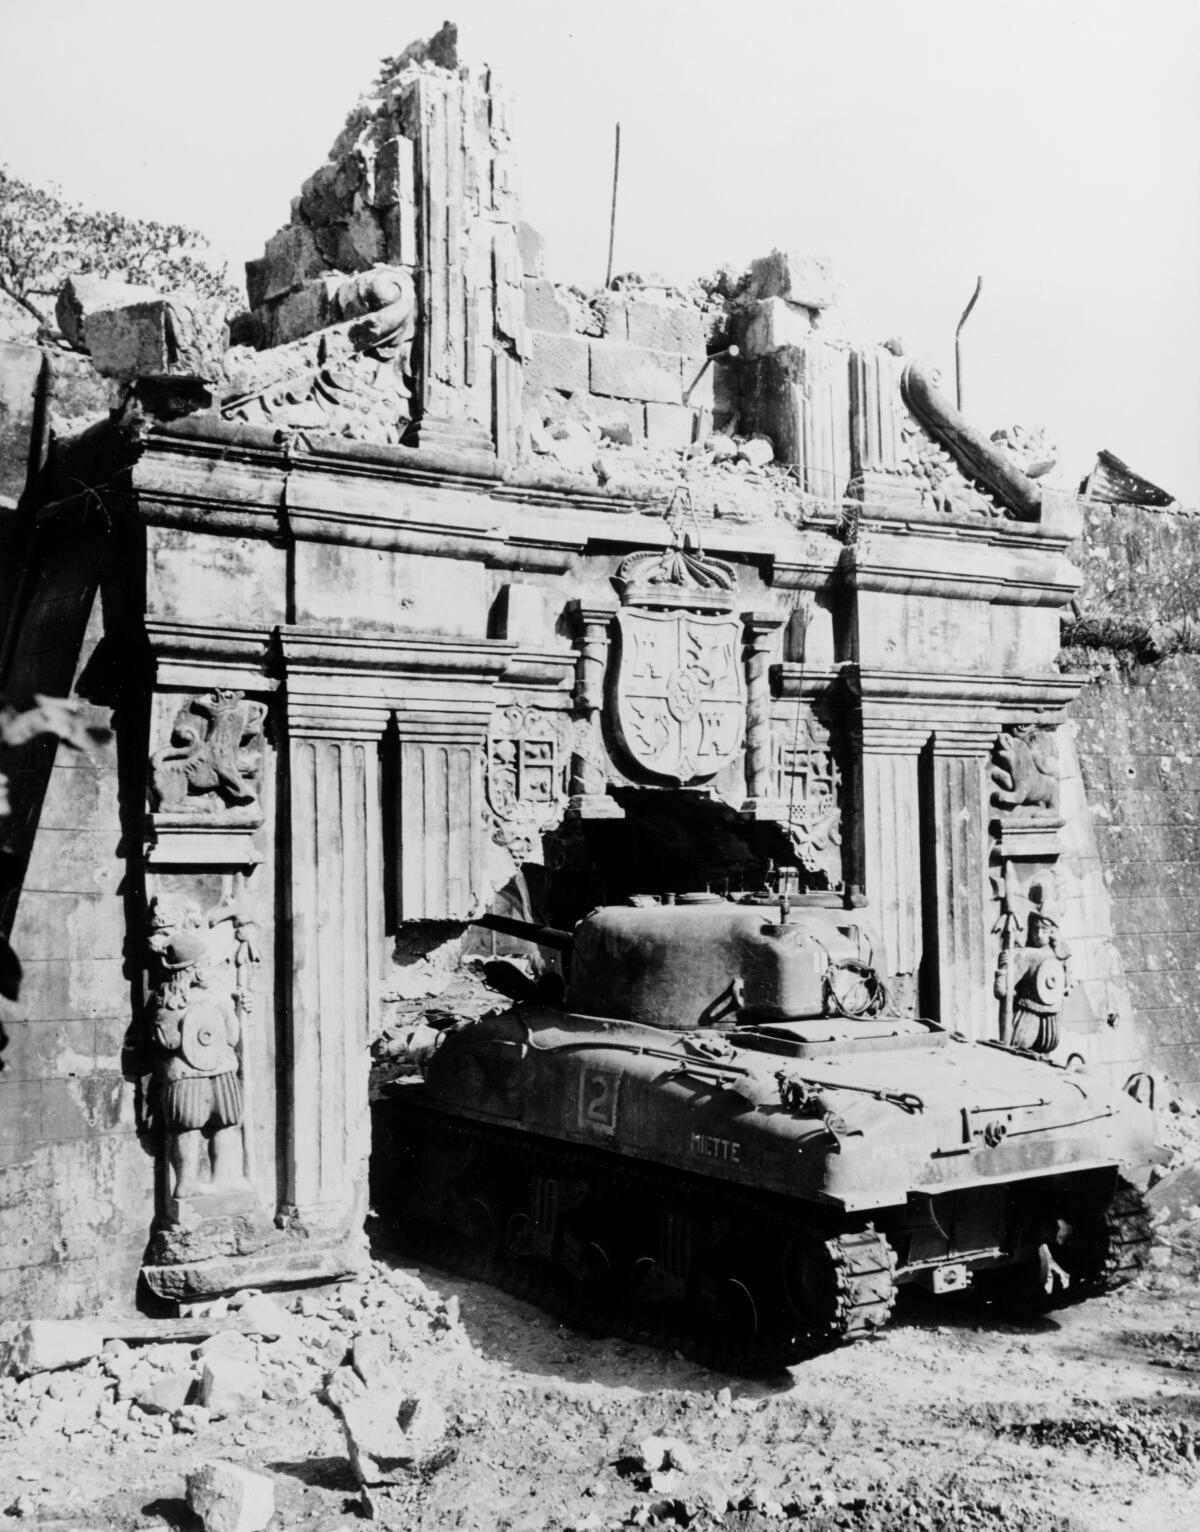 A U.S. Army M4 Sherman tank during the Battle of Manila.